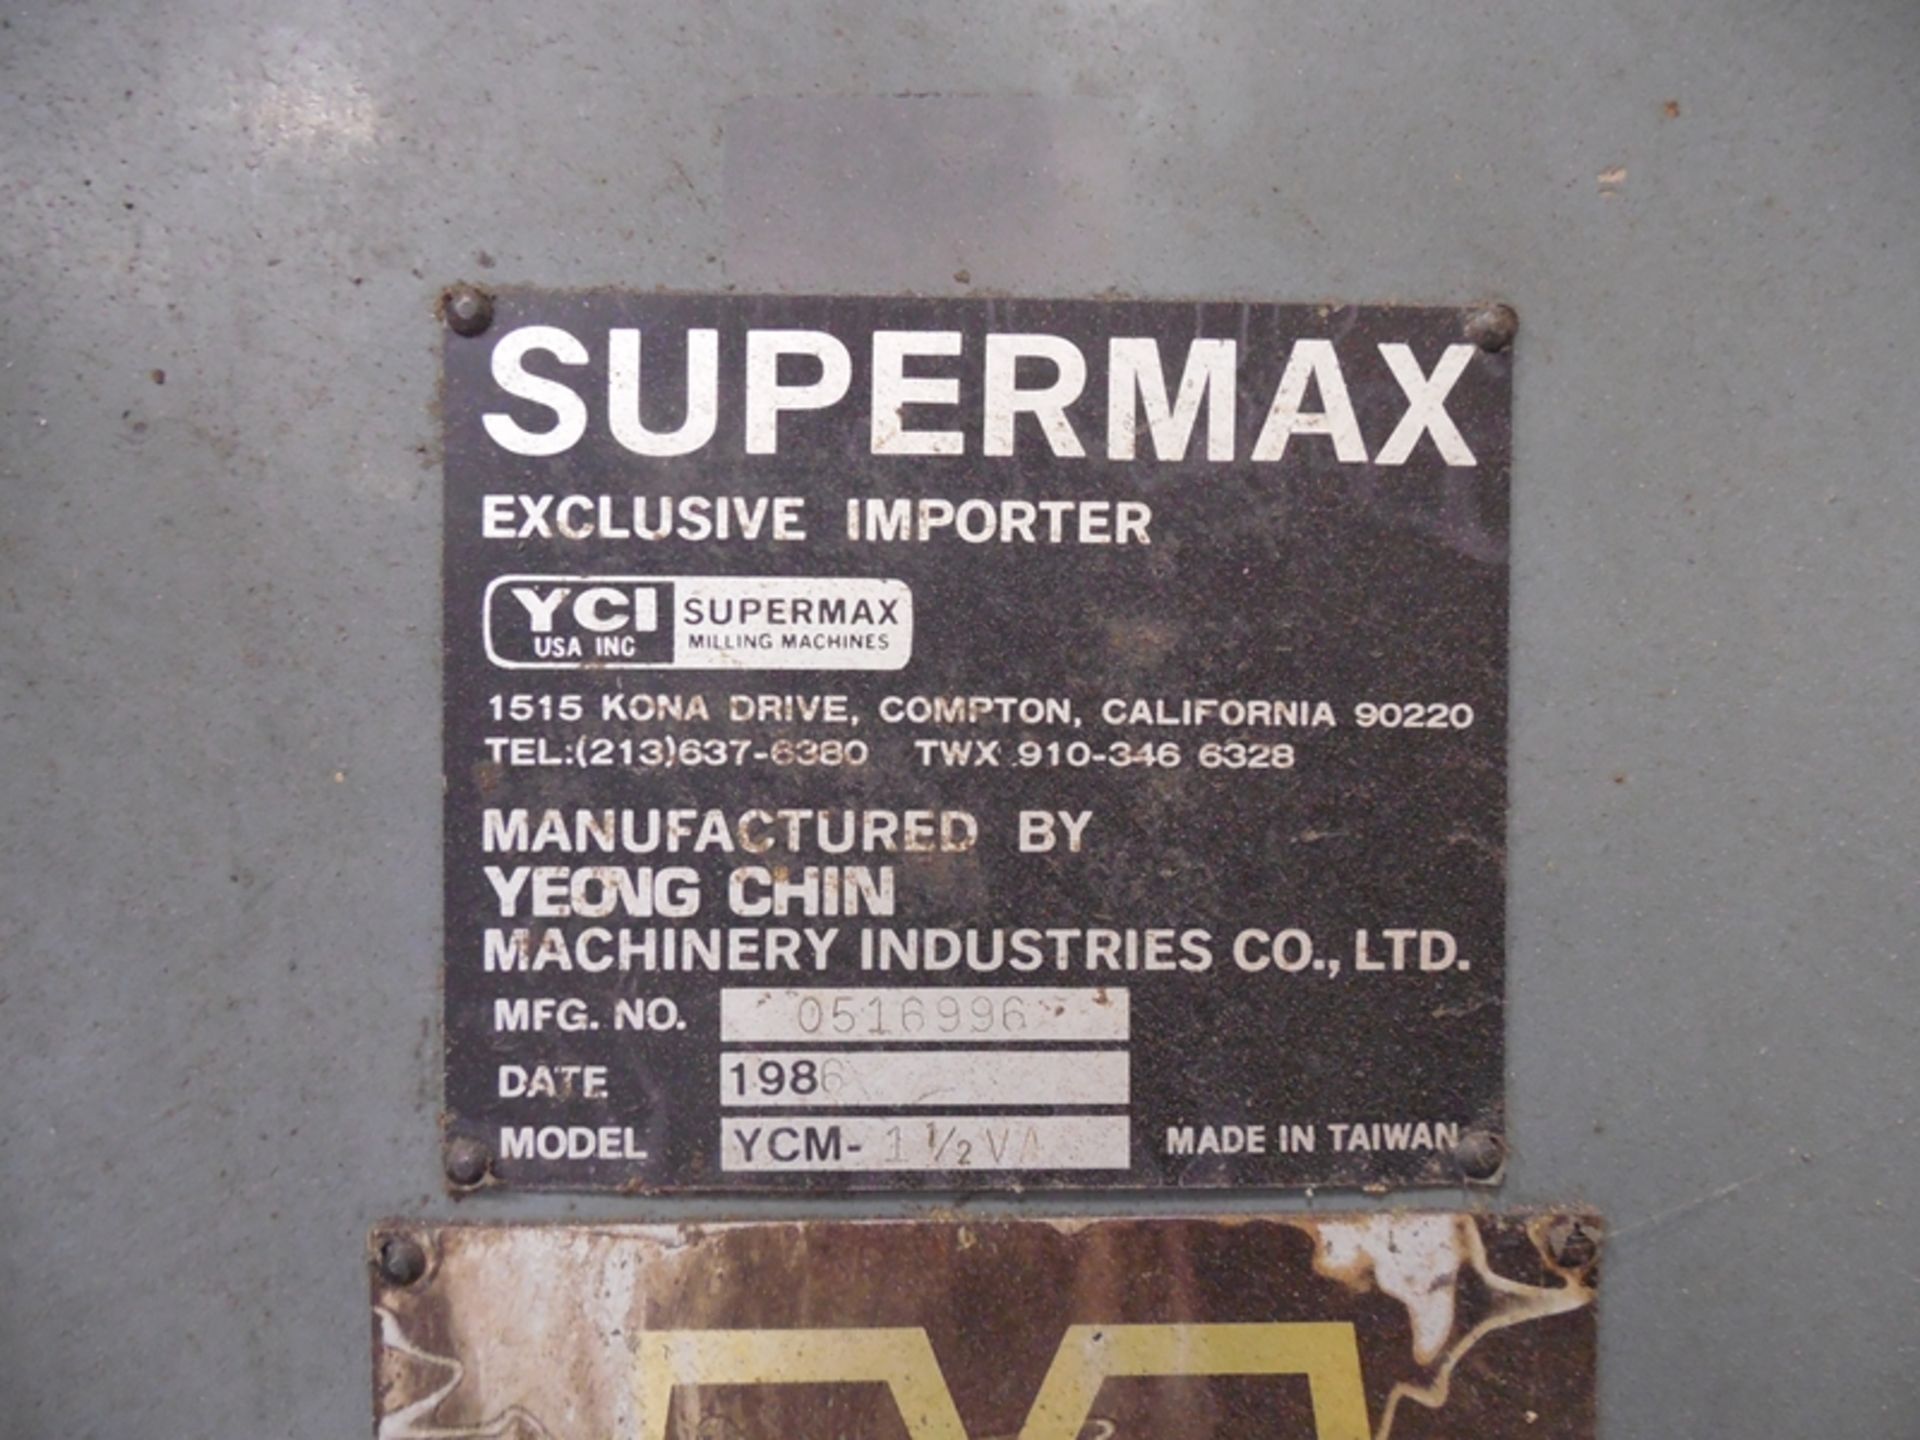 Super Max Yeong Chin Milling Machine ser# 0516996Model YCM-1 1/2 VA - Image 5 of 5